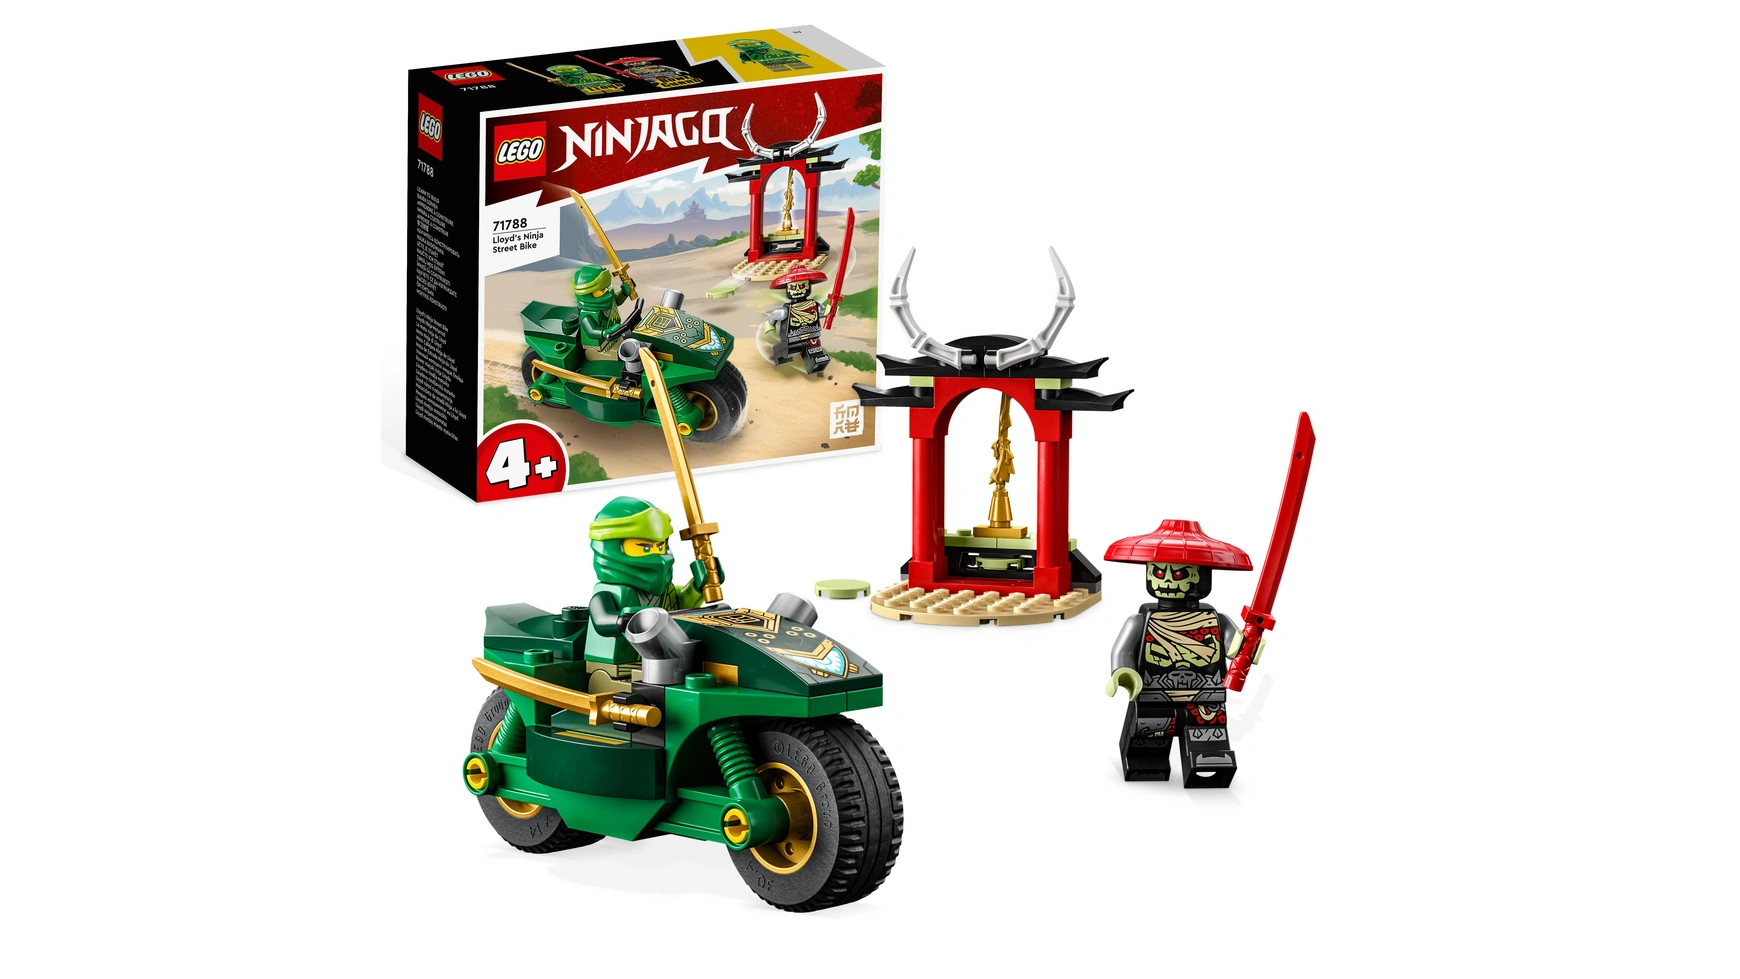 Lego NINJAGO Игрушка-мотоцикл Lloyd's Ninja для детей от 4 лет и старше цена и фото